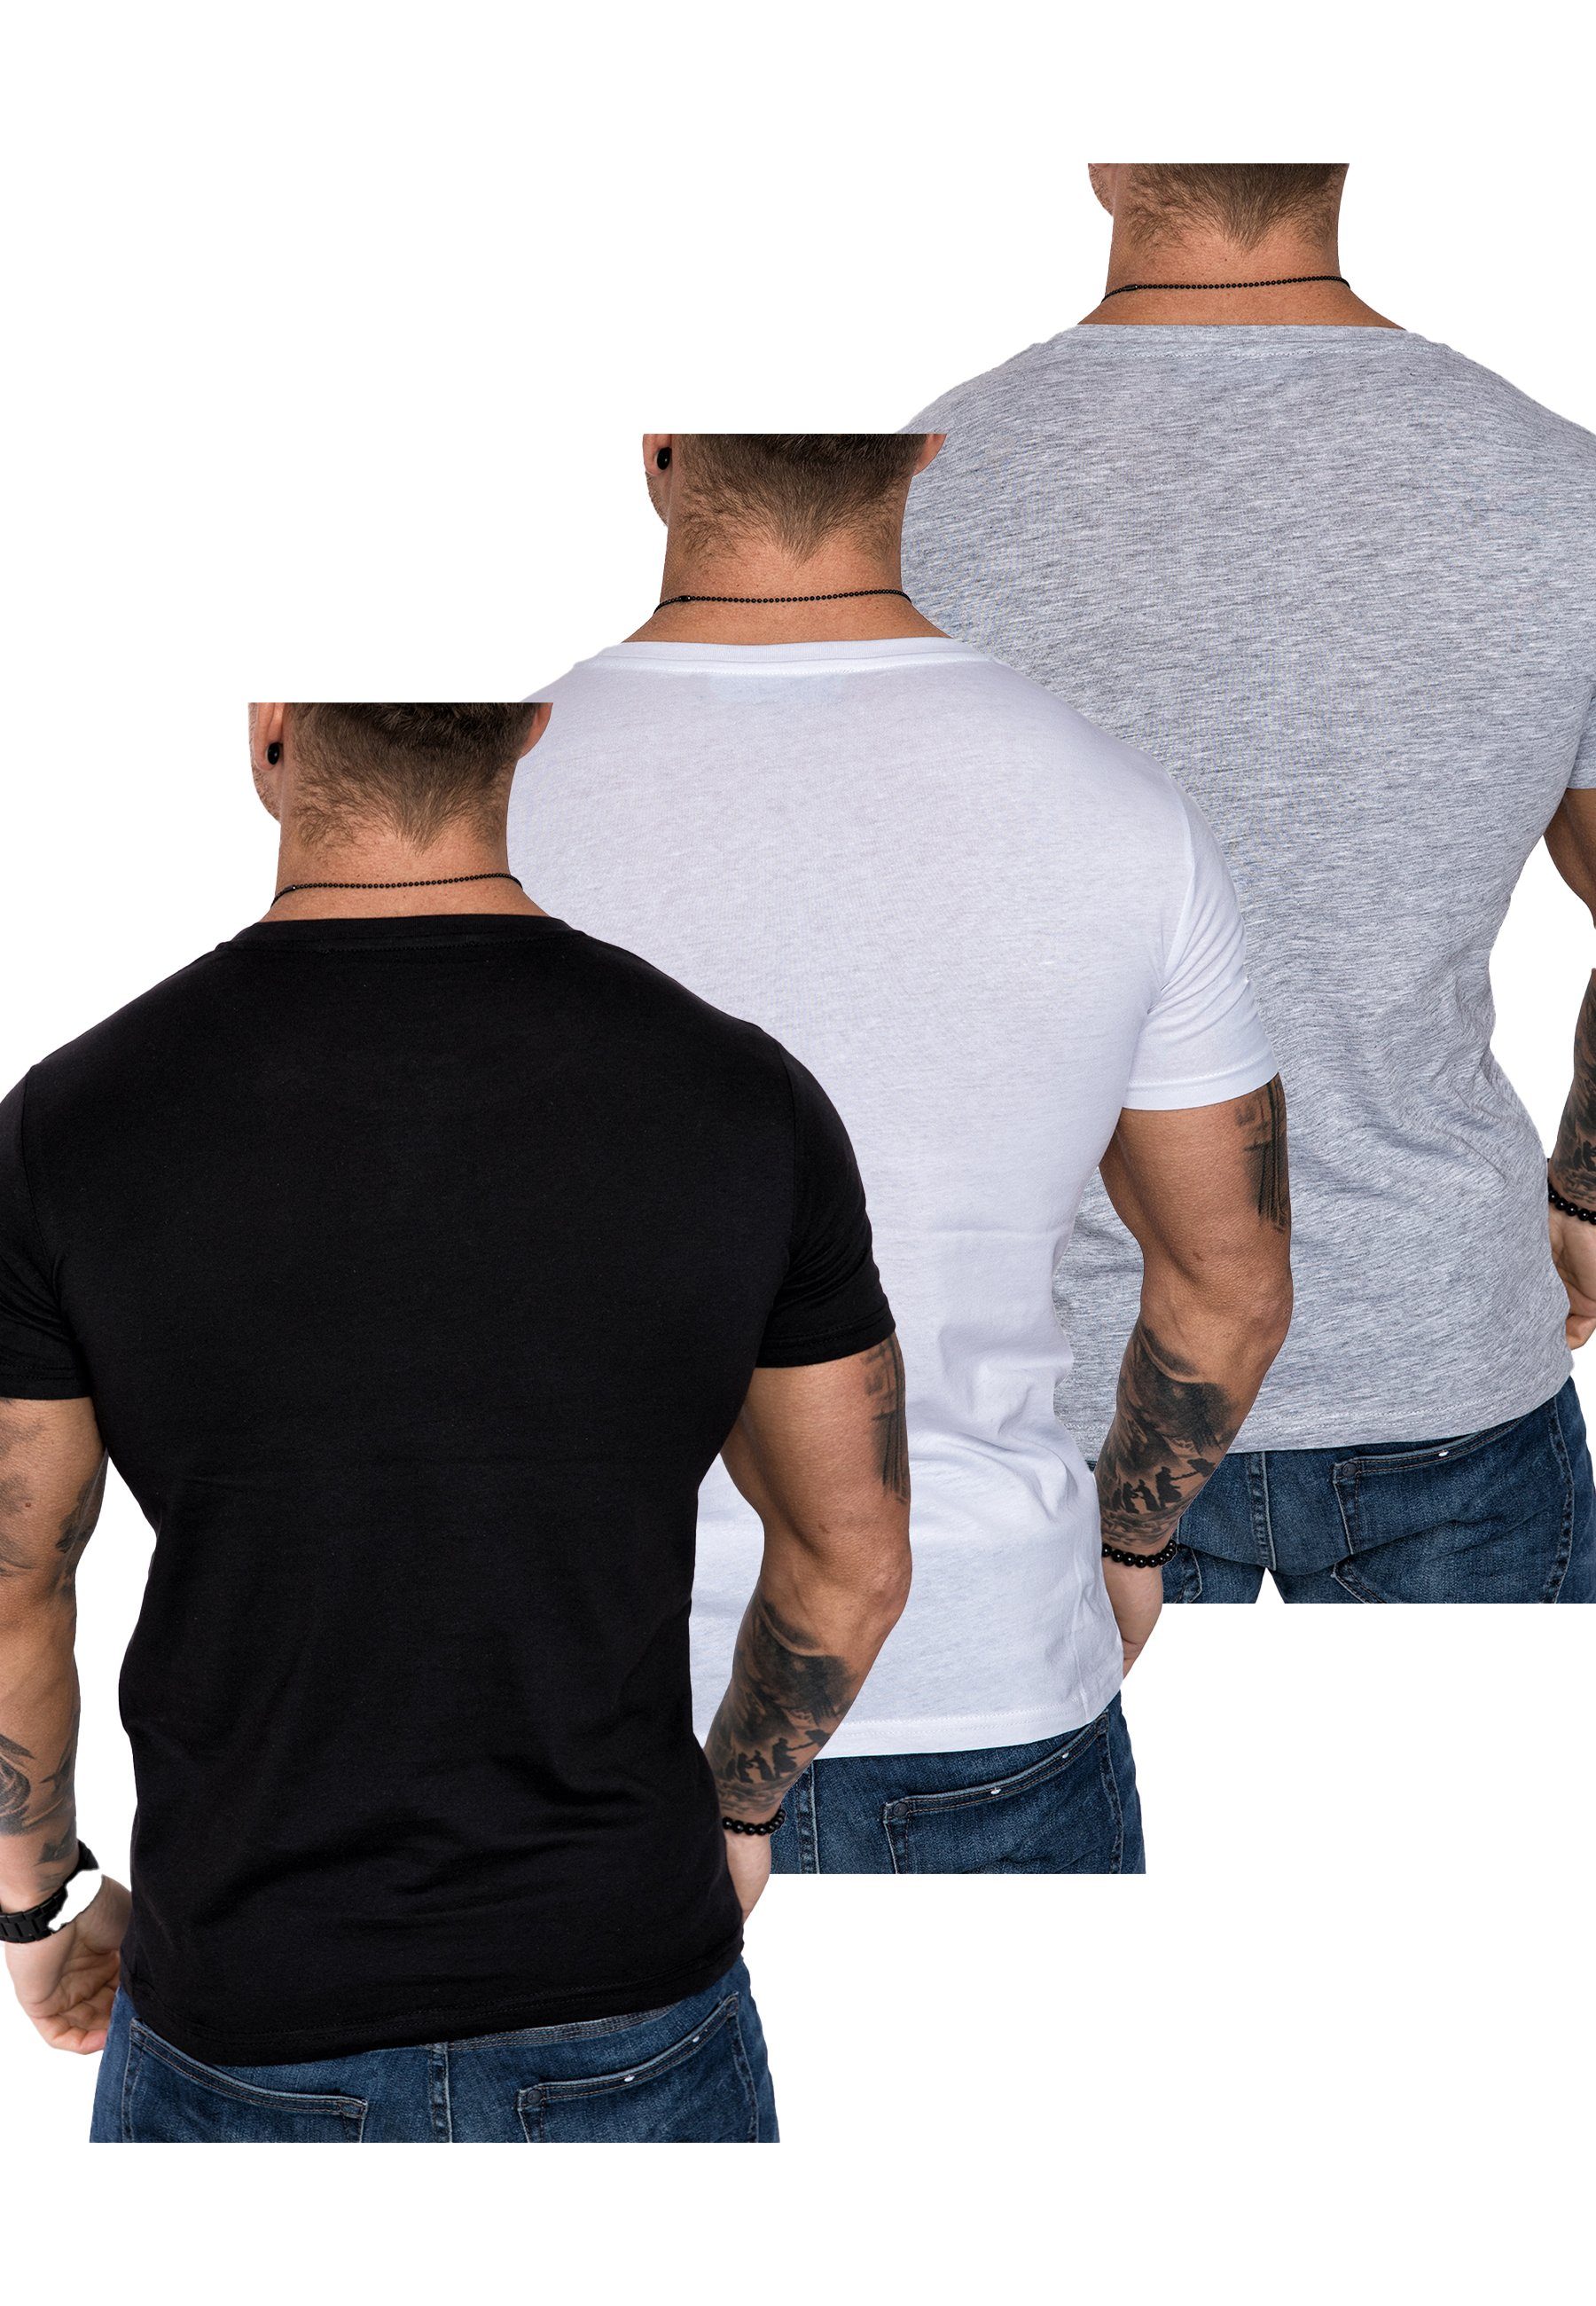 Amaci&Sons T-Shirt LANCASTER Herren + mit + 3er-Pack Oversize T-Shirts Weiß Basic 3. Rundhalsausschnitt (3er-Pack) T-Shirt (Grau Schwarz)